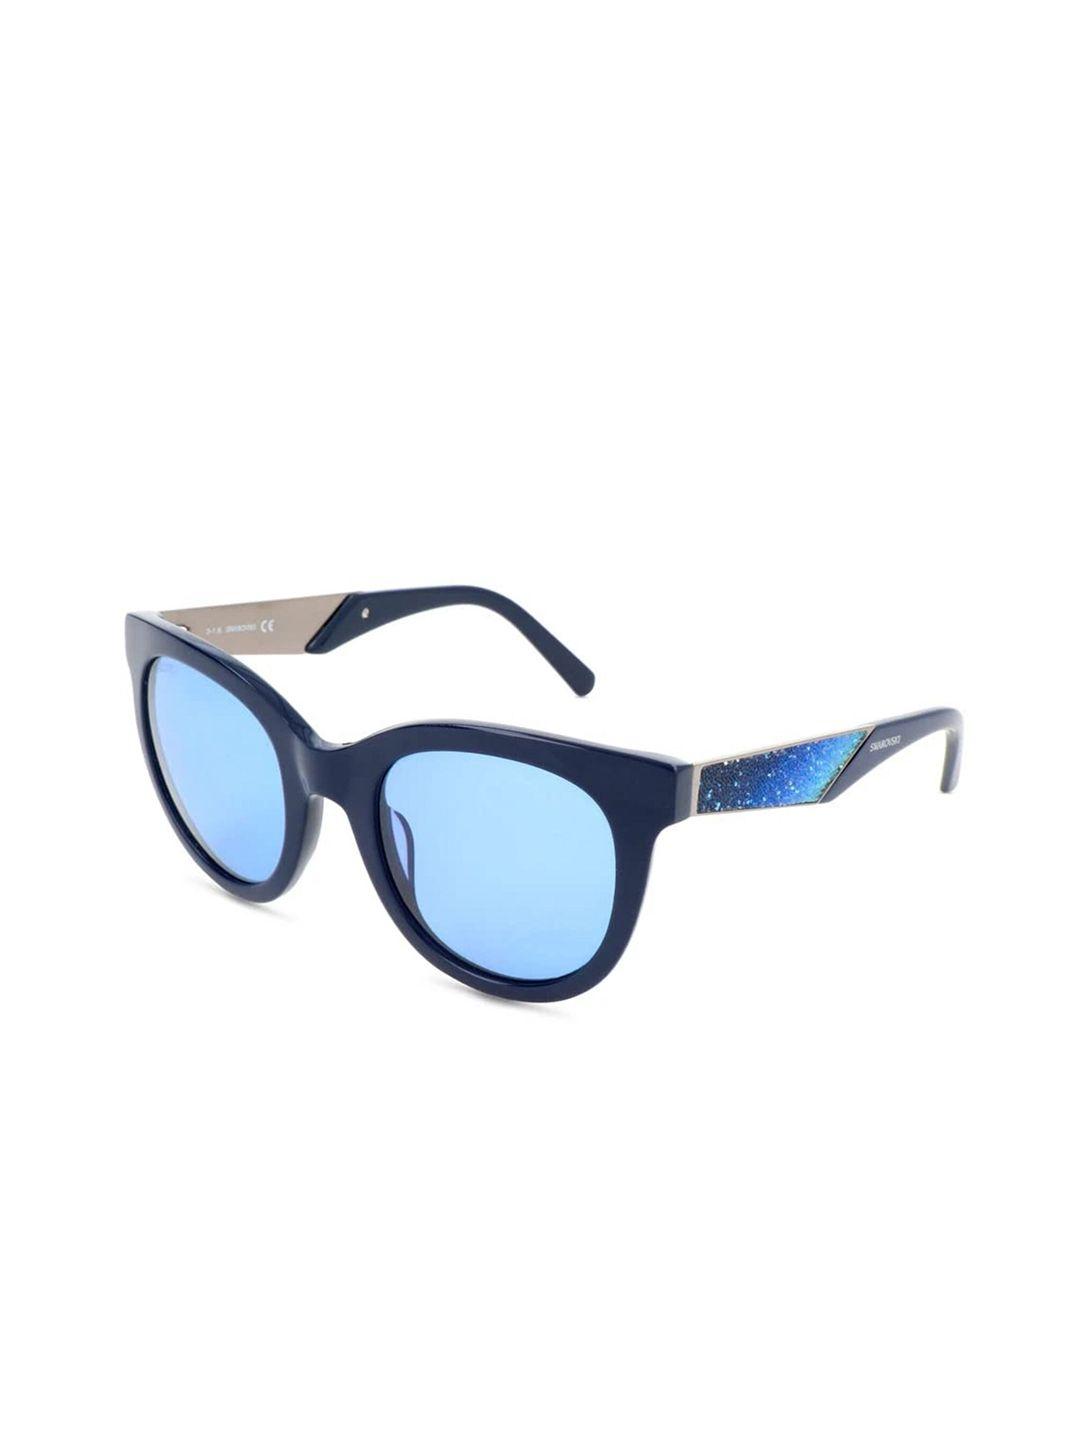 swarovski women cateye sunglasses with uv protected lens